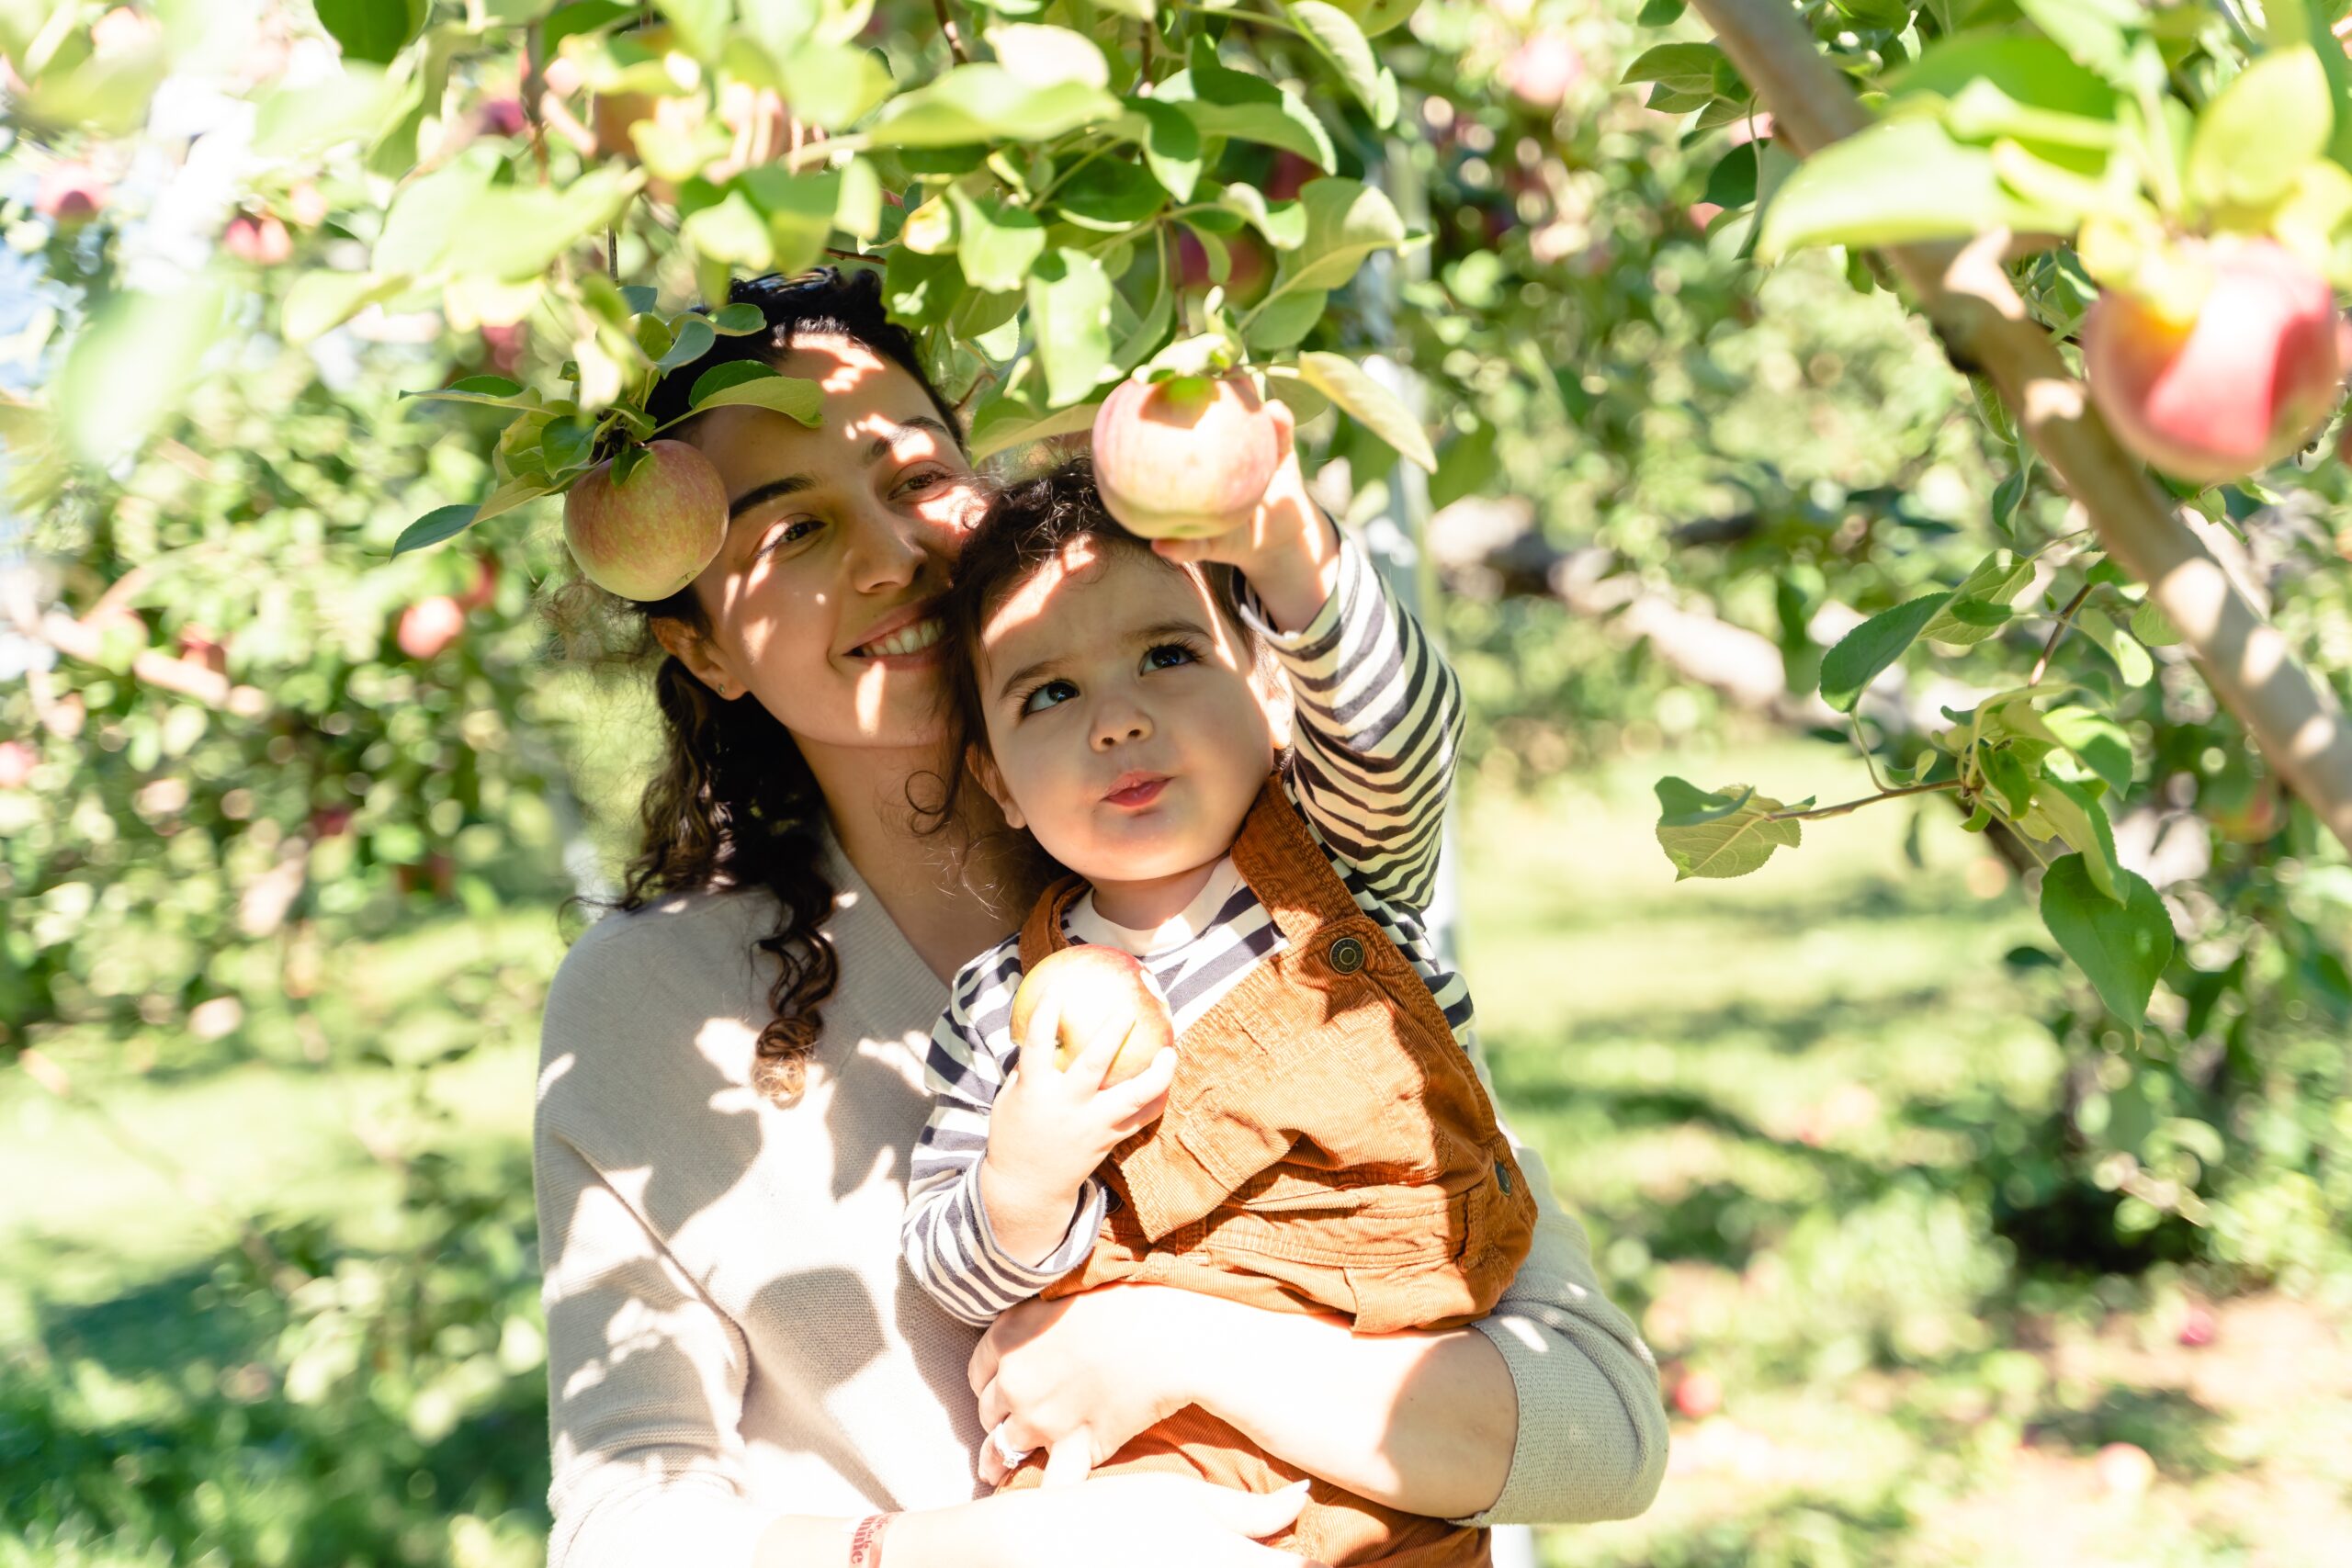 mom-and-child-having-fun-while-picking-apples-2022-03-05-10-17-38-utc